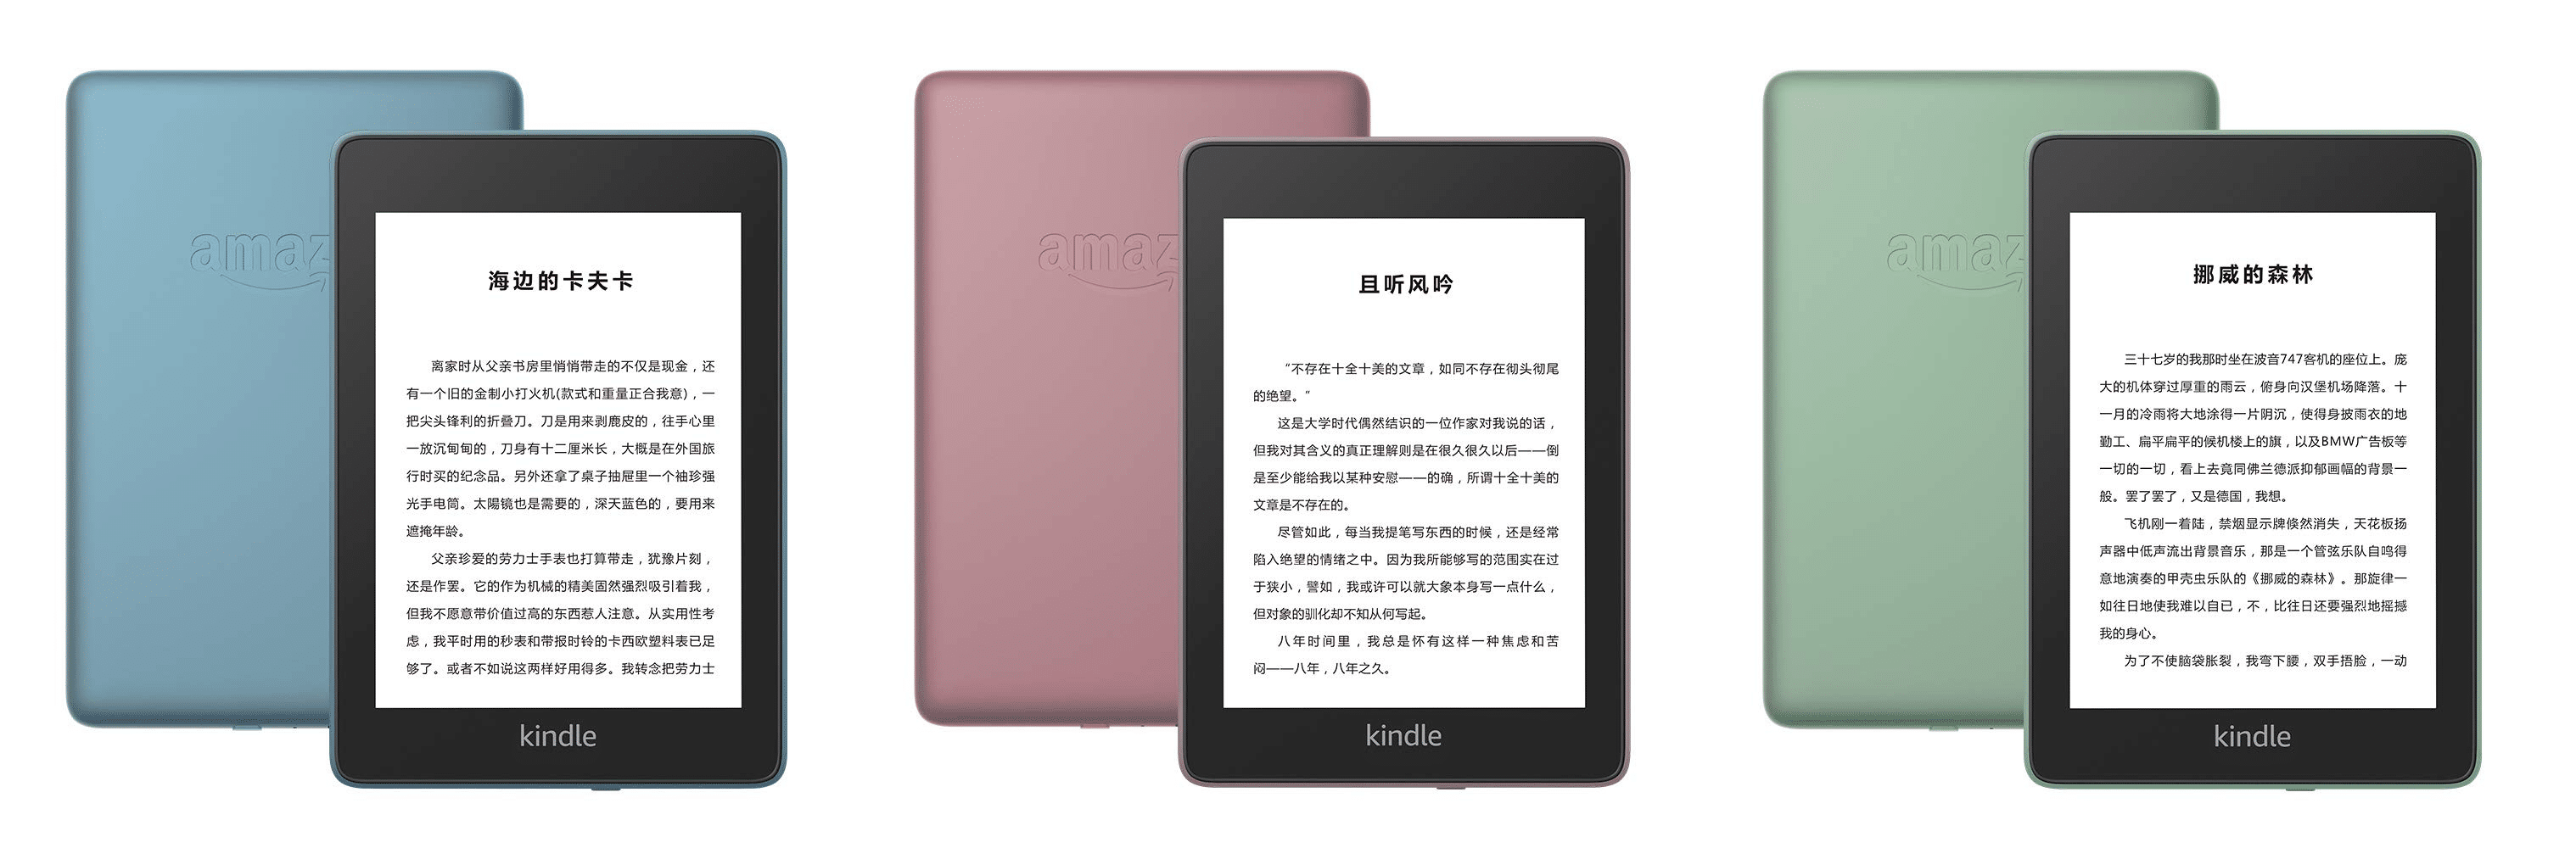 Kindle Paperwhite и Oasis скоро получат дополнительные варианты цвета